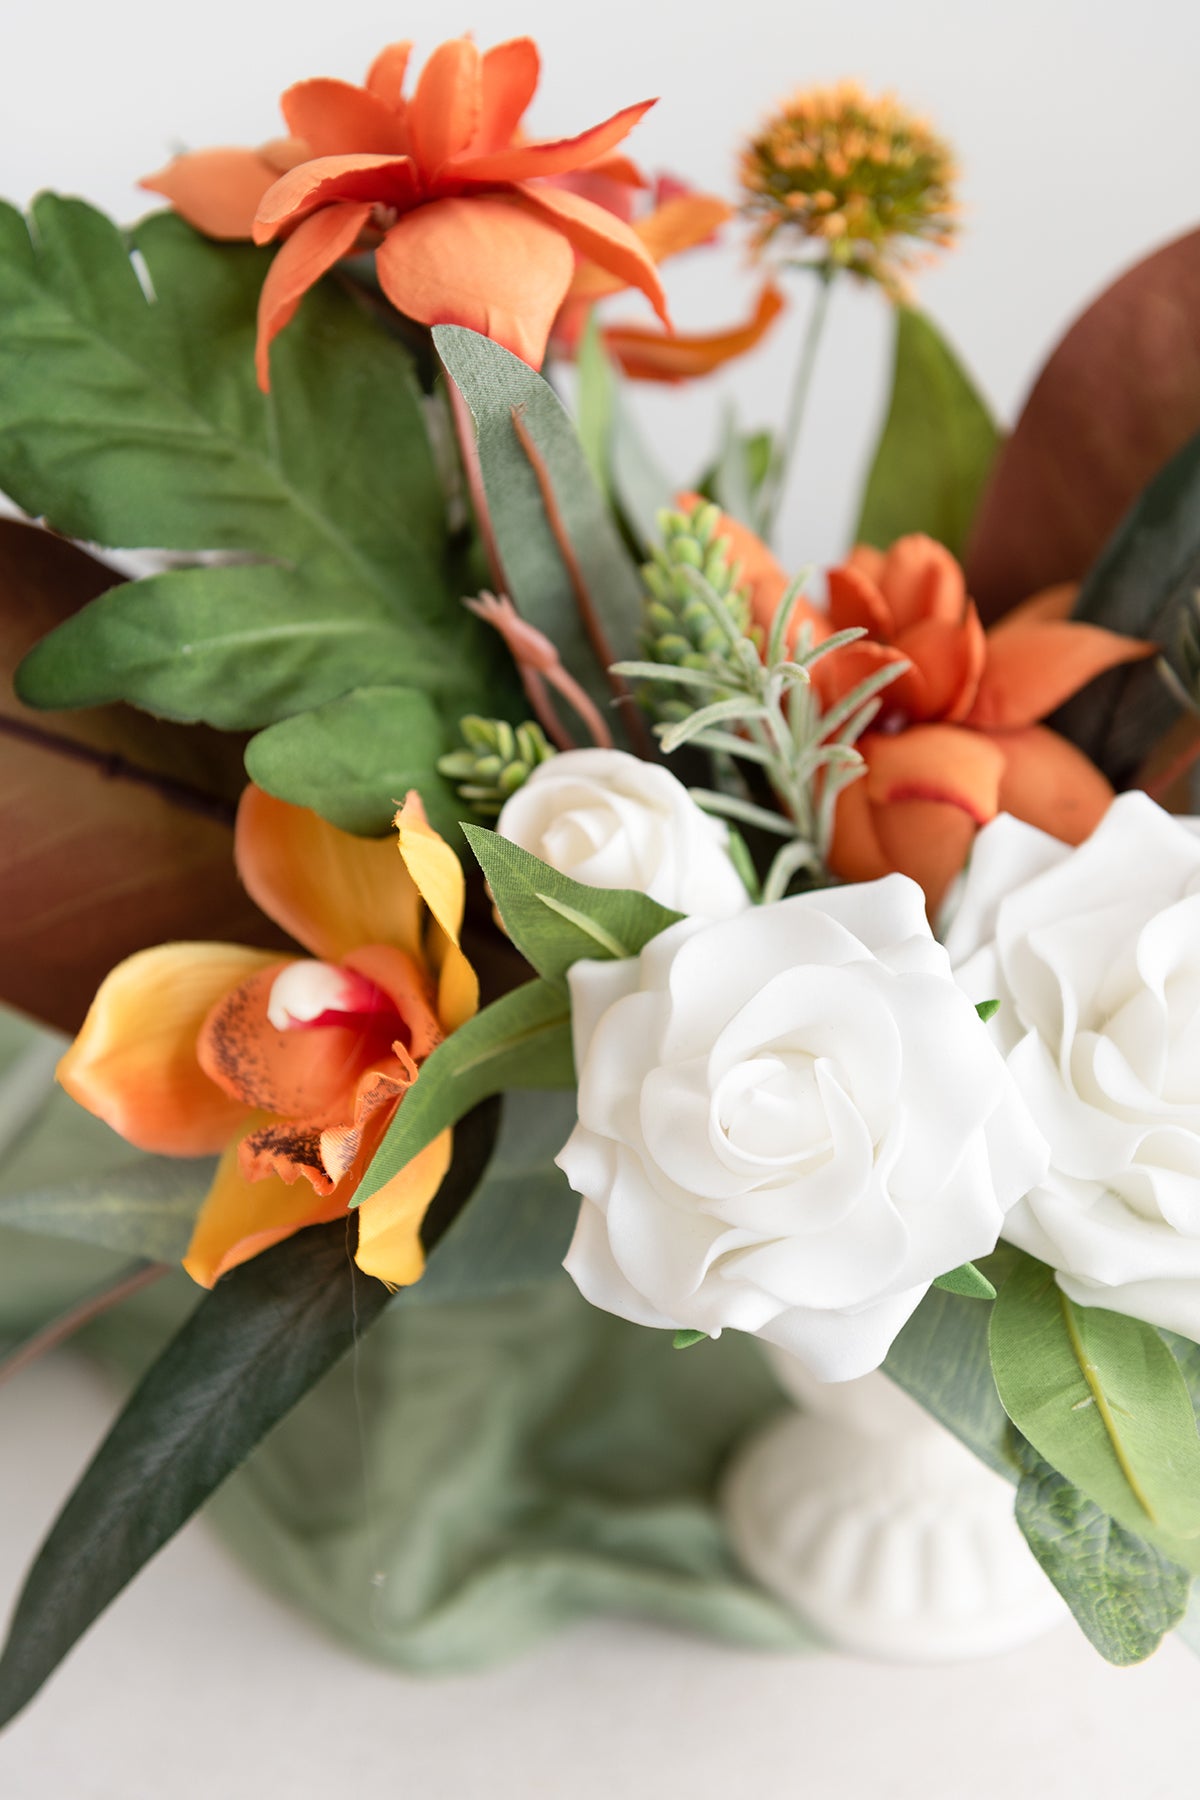 Large Floral Centerpiece Set in Orange & Olive Green | Clearance